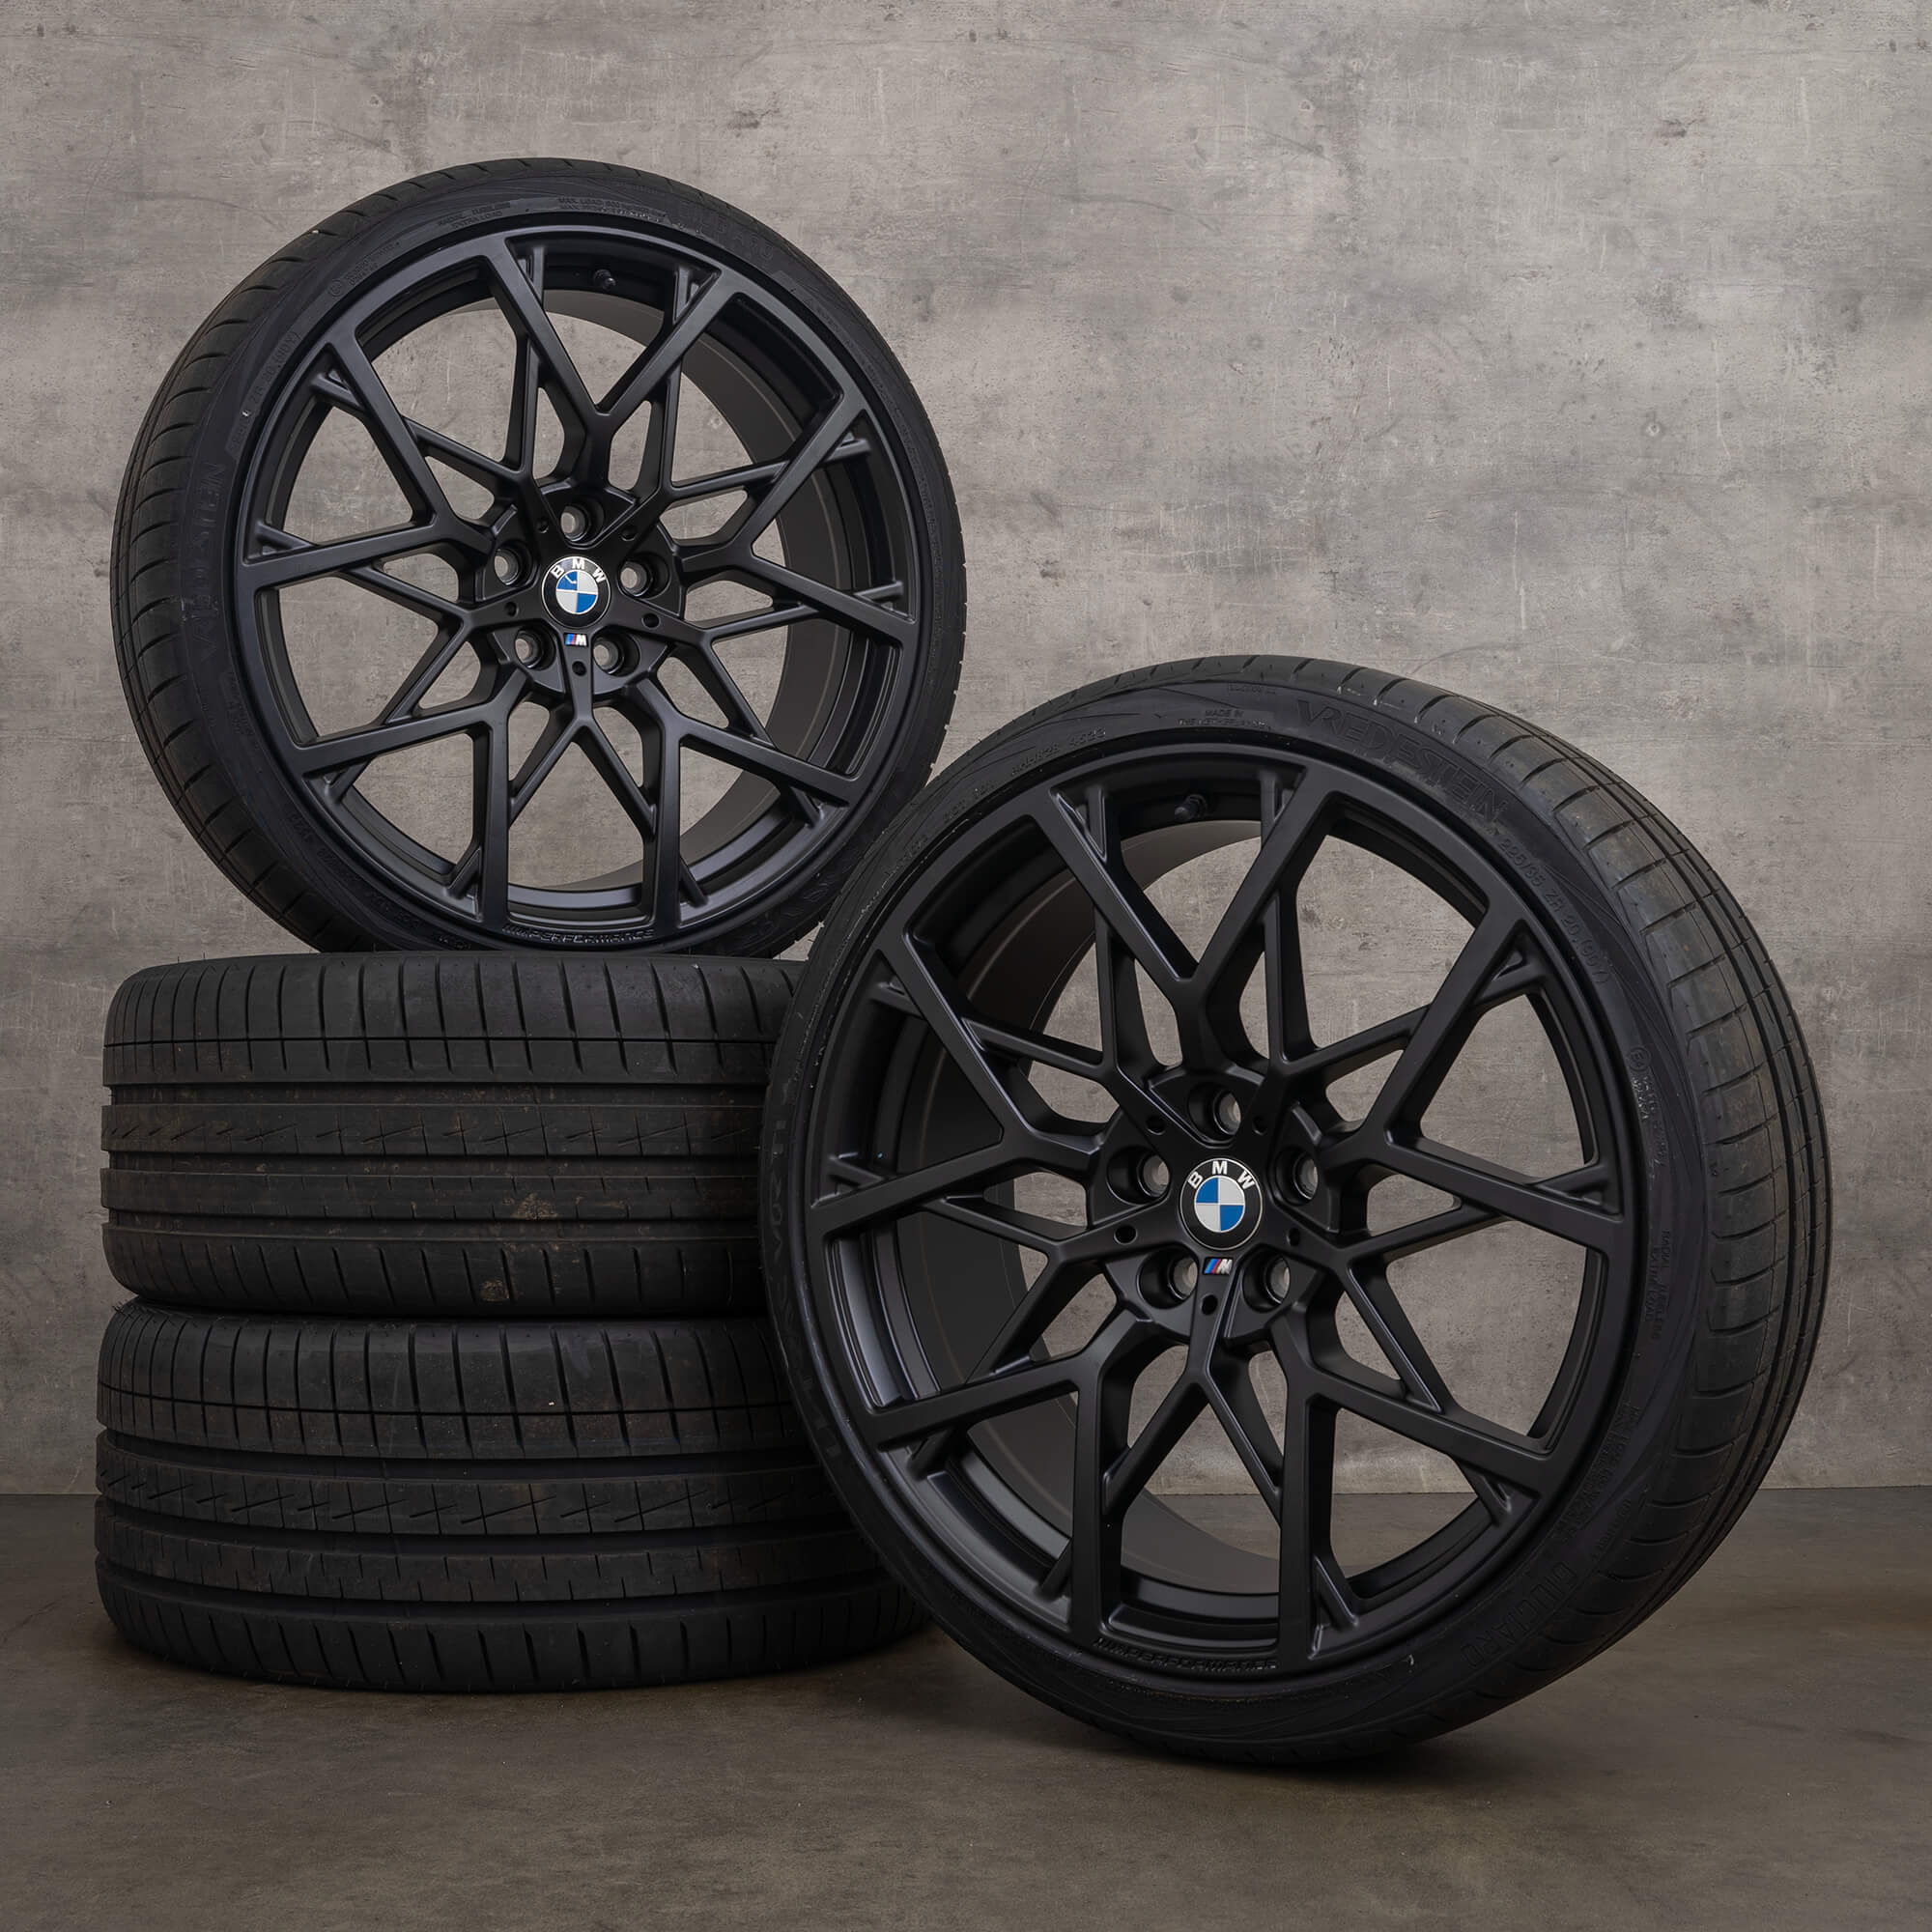 OEM BMW 3 Series G20 G21 20 inch rims 795 M summer wheels 6893514 6893515 aluminum black